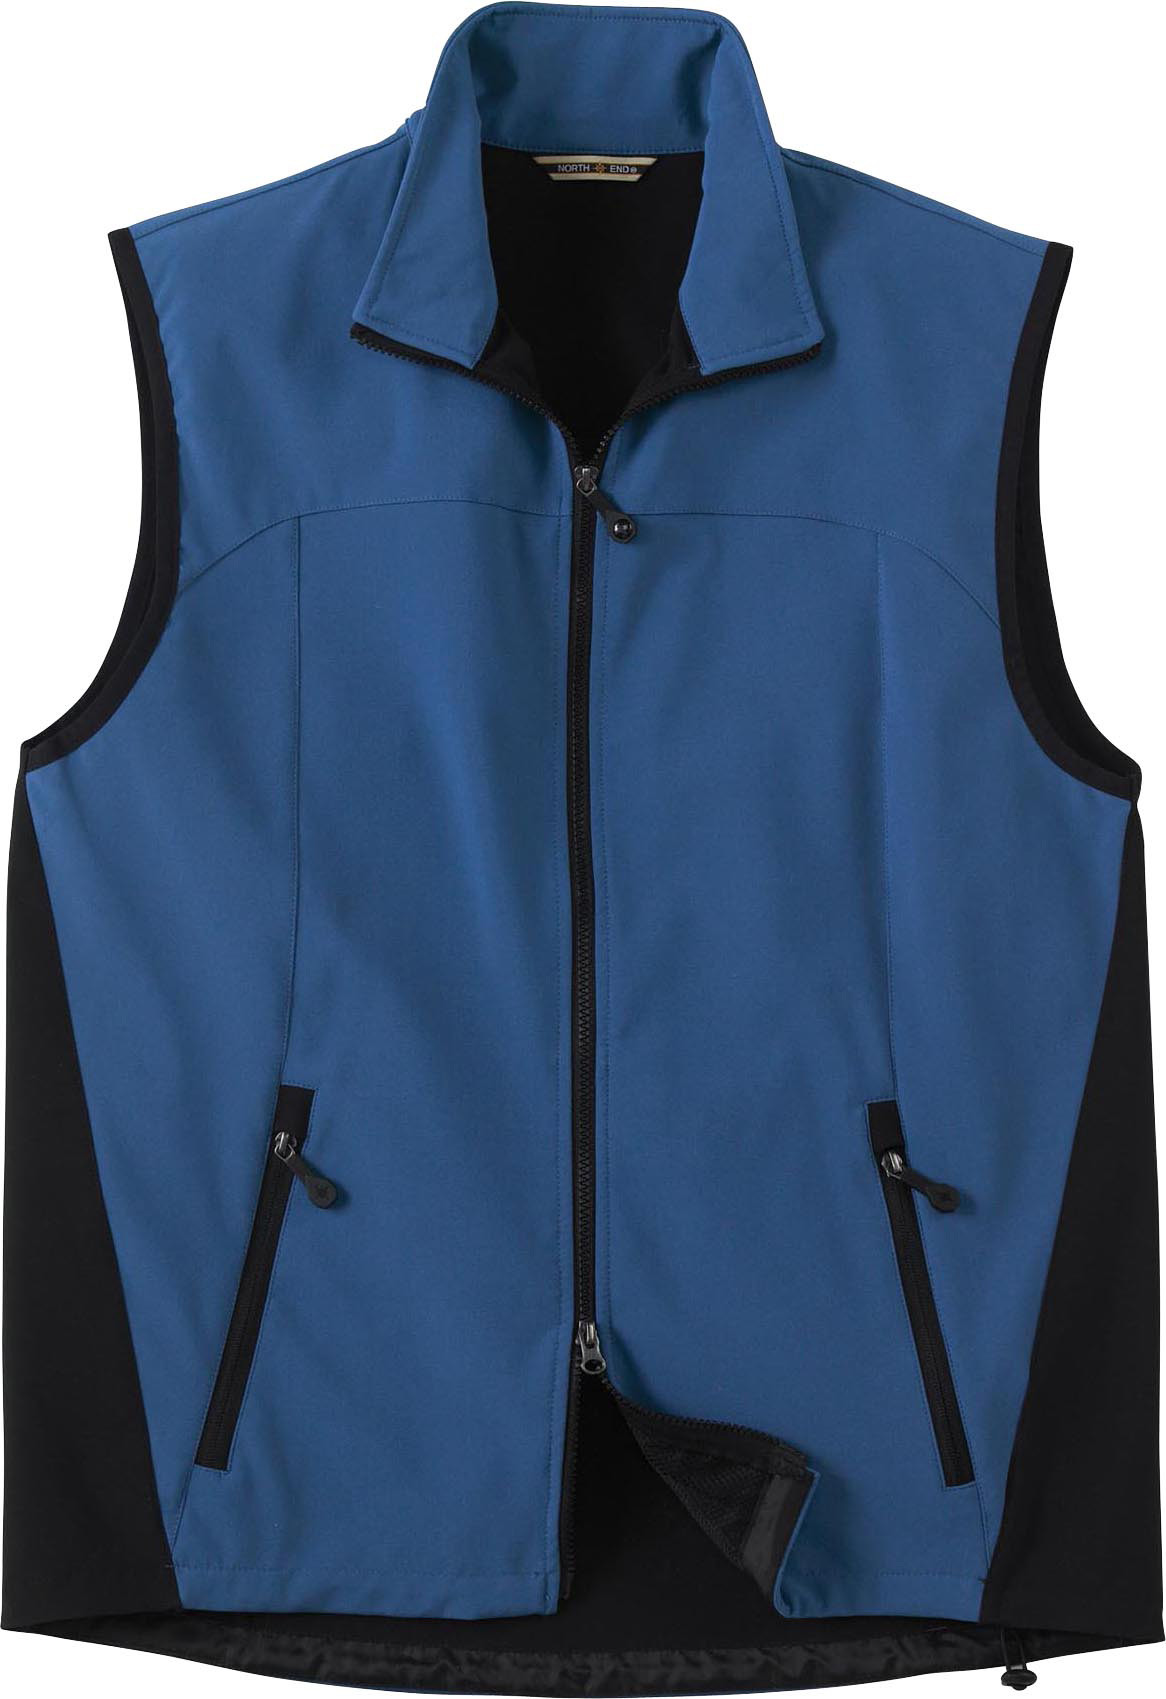 North End 88127 - Men's Three-Layer Light Bonded Performance Soft Shell Vest